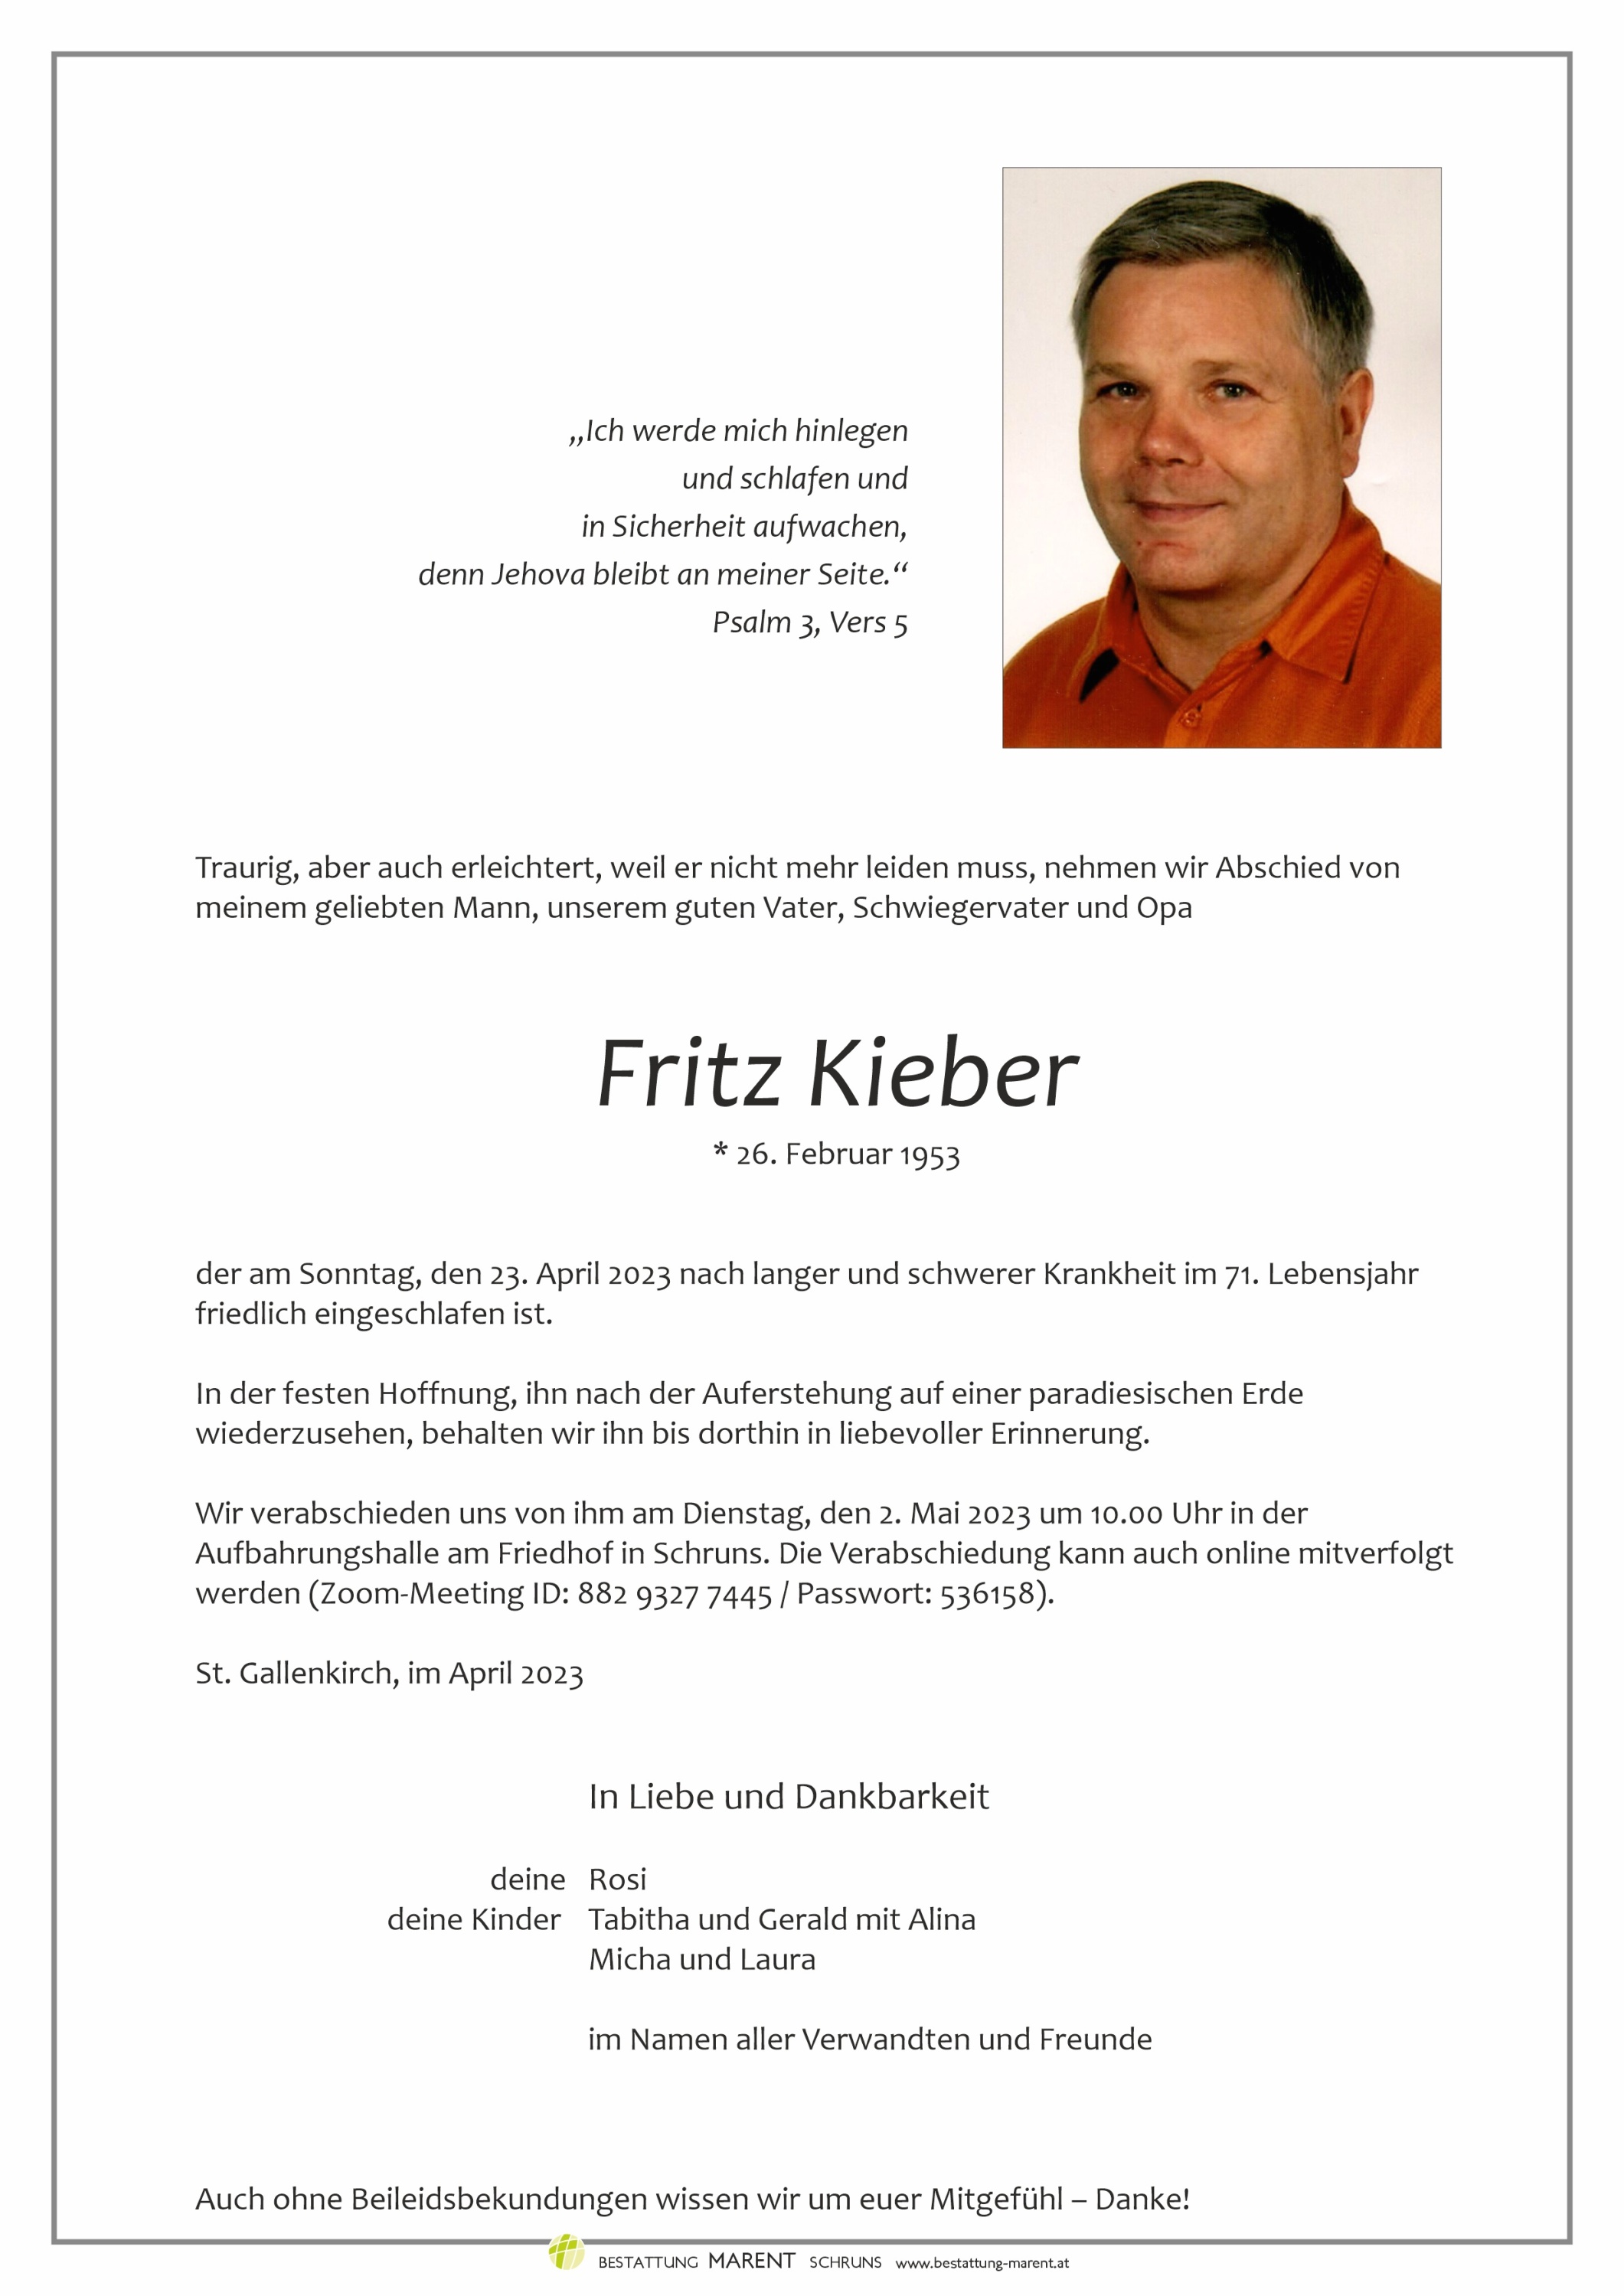 Fritz Kieber